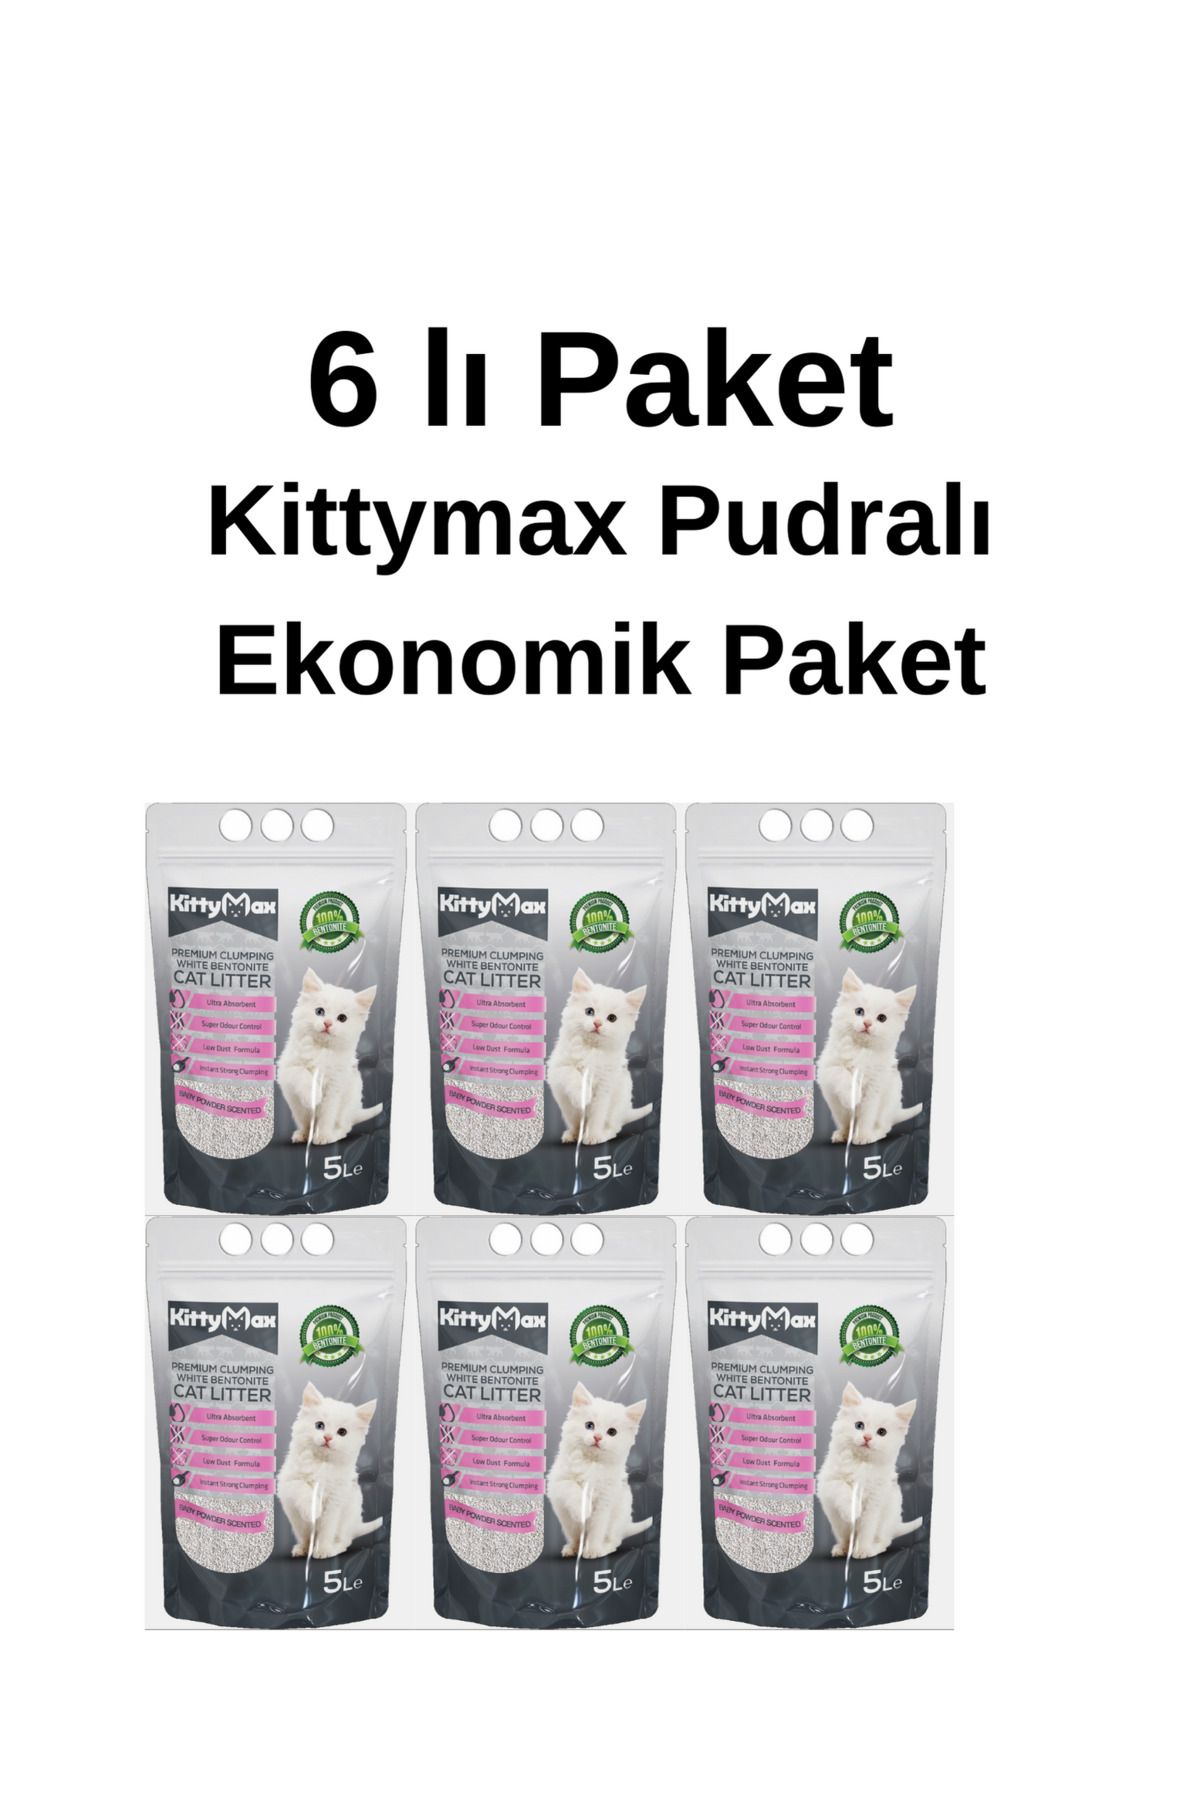 Kittymax Premium Bentonit Kedi Kumu 5 Lt Pudralı 6 lı Ekonomik Paket